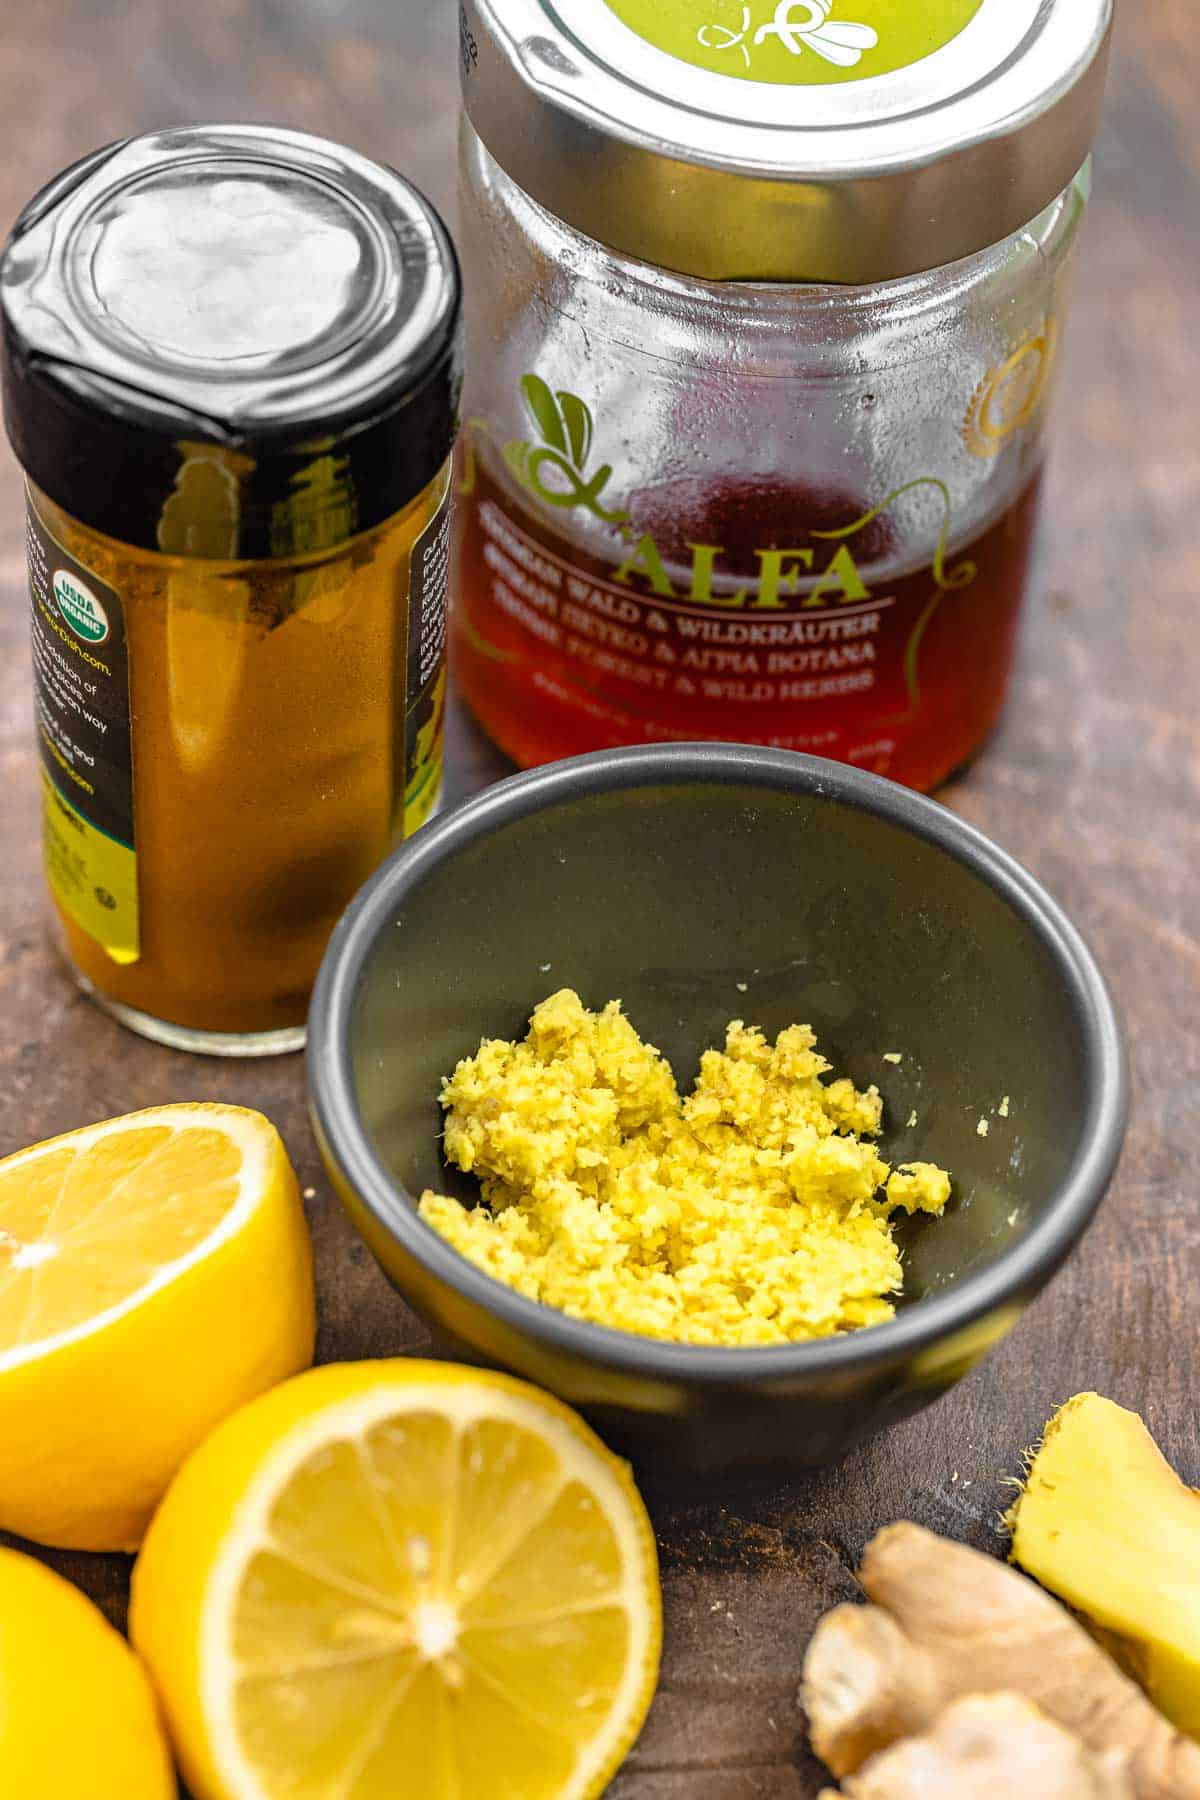 ingredients for ginger tea including ginger, lemon, turmeric, and honey.